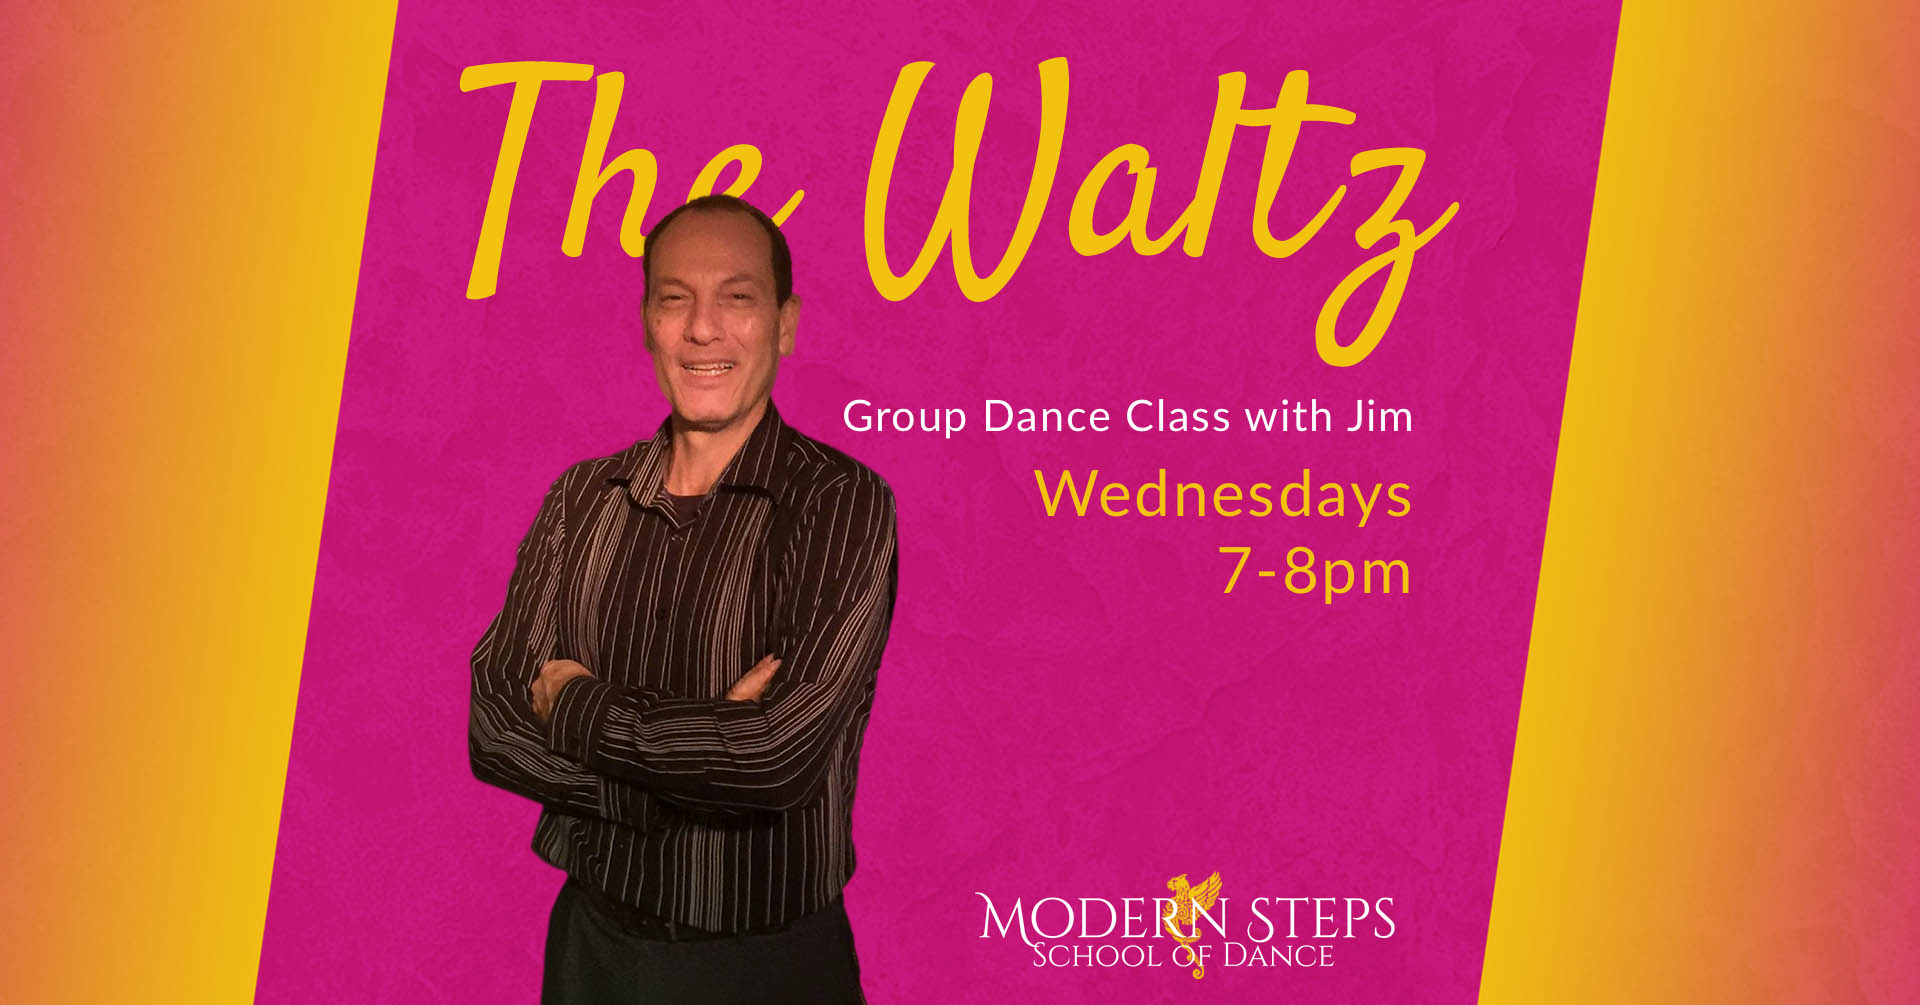 Naples Ballroom Dance Lessons - The Waltz - Modern Steps School of Dance - Naples Florida